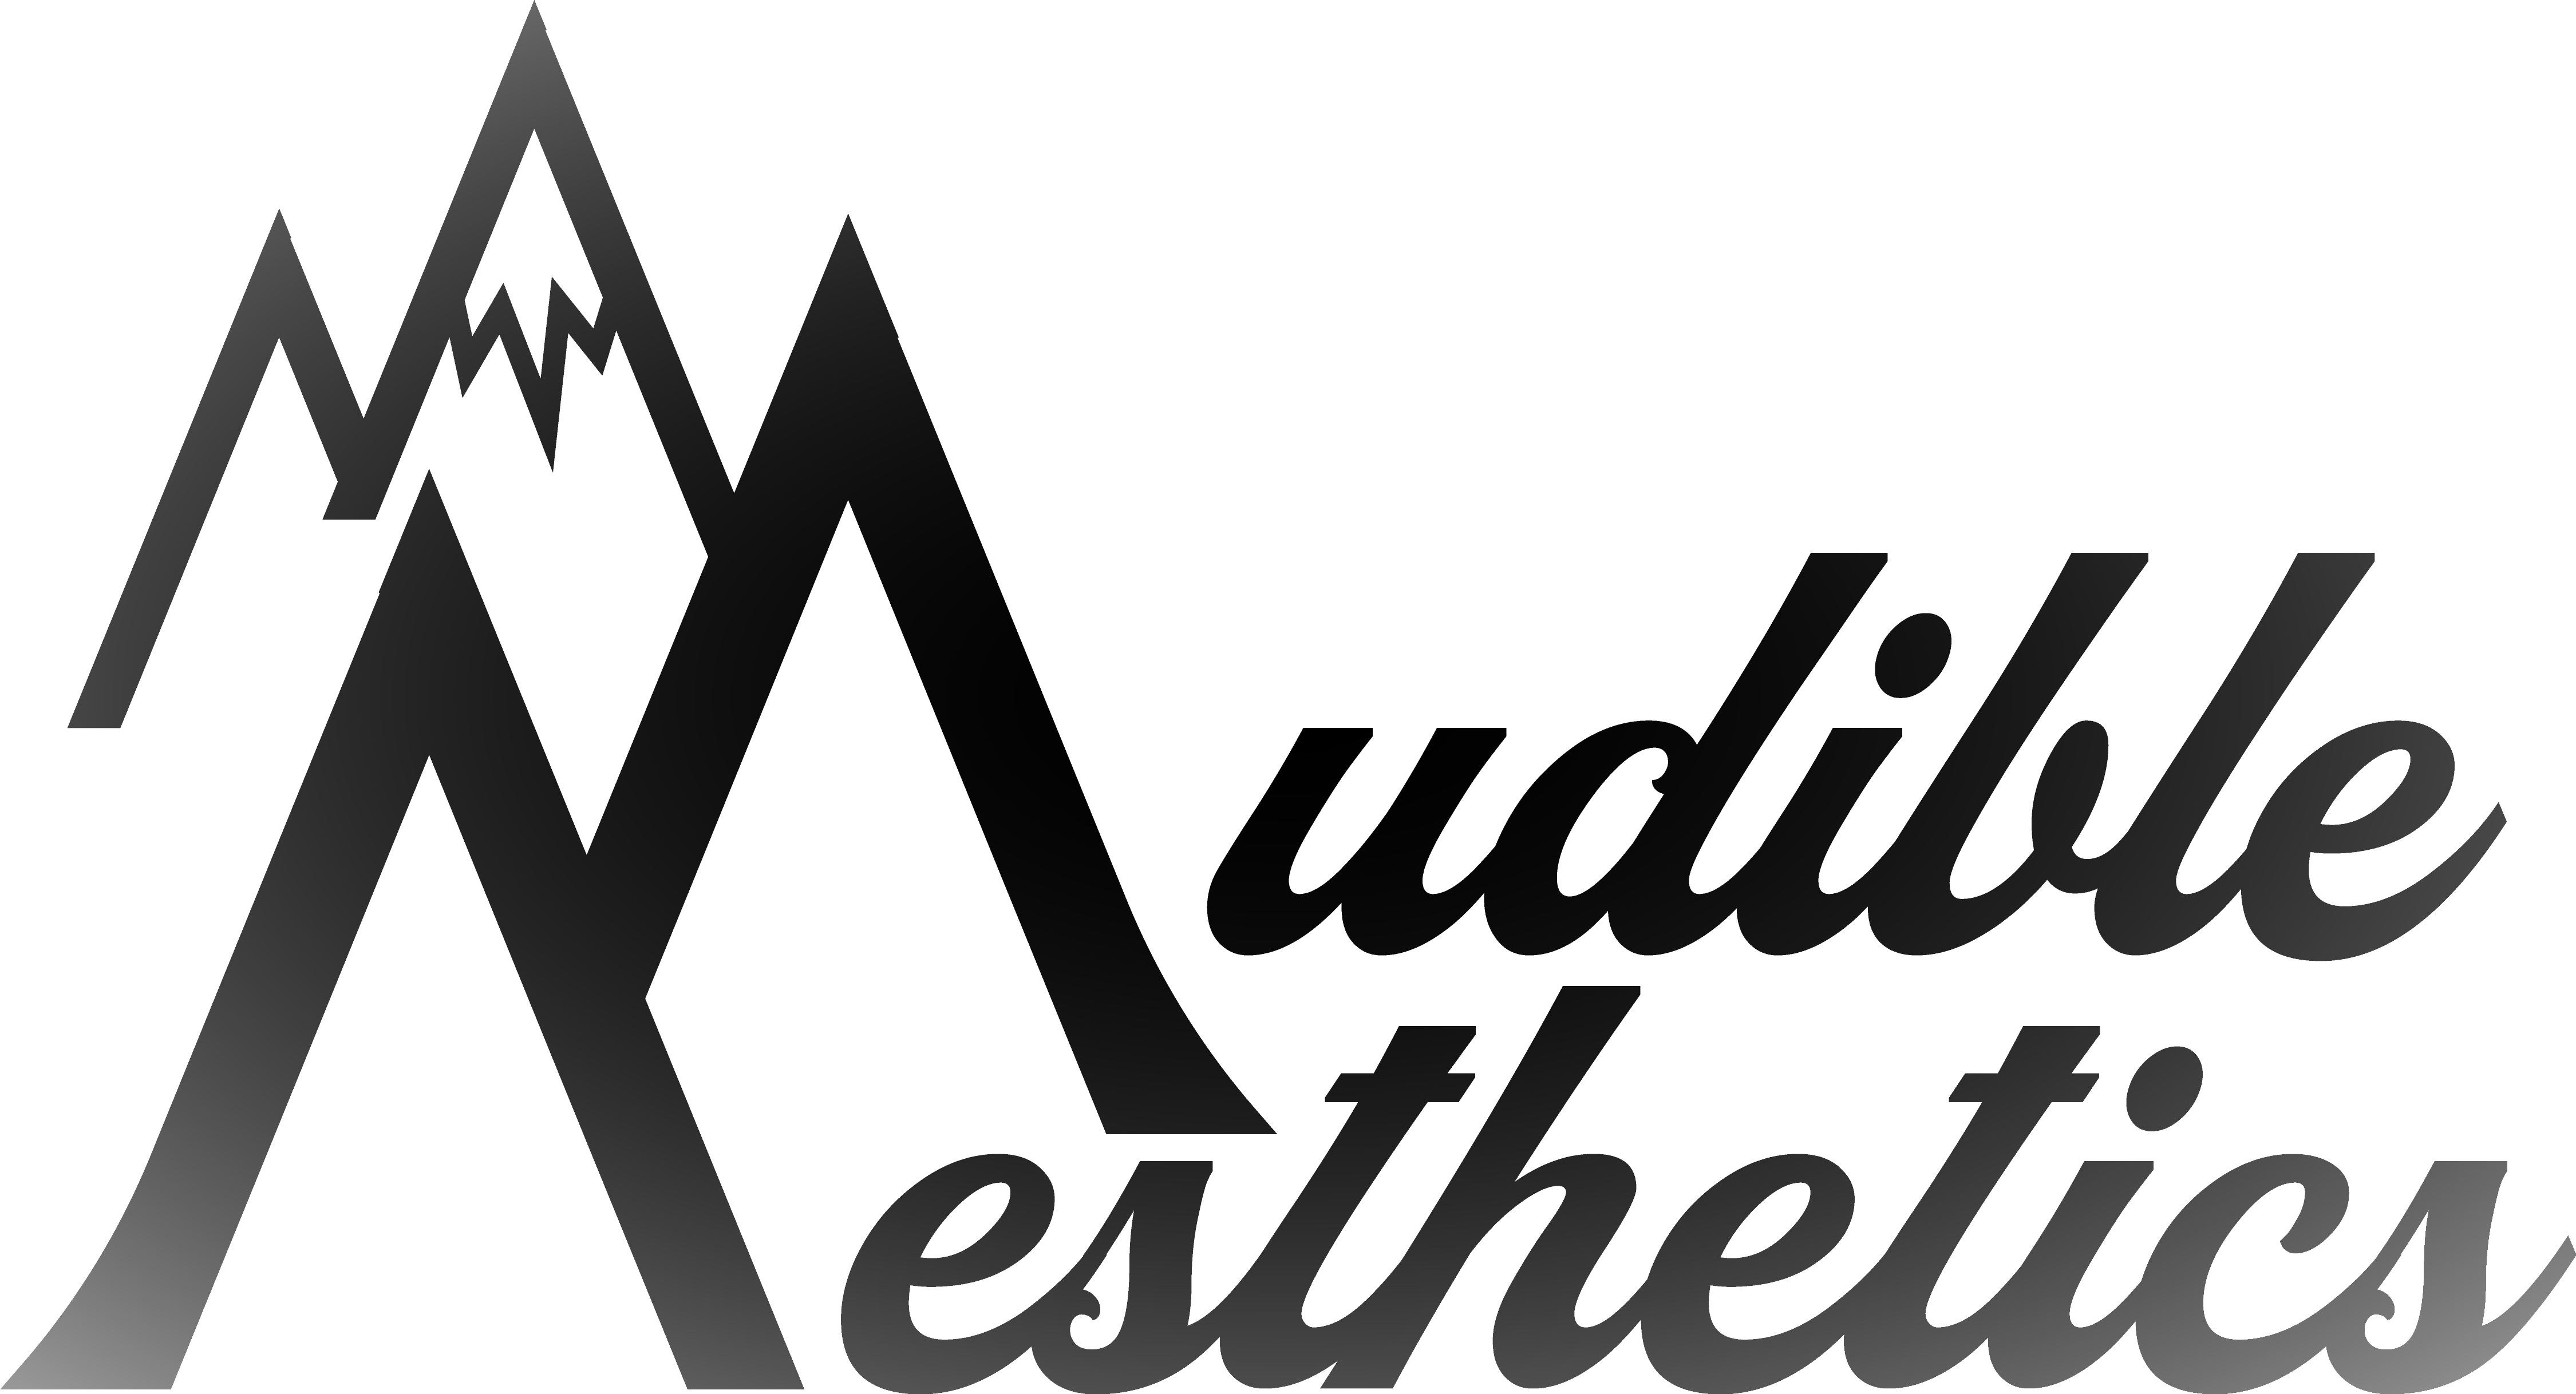 Audible Aesthetics